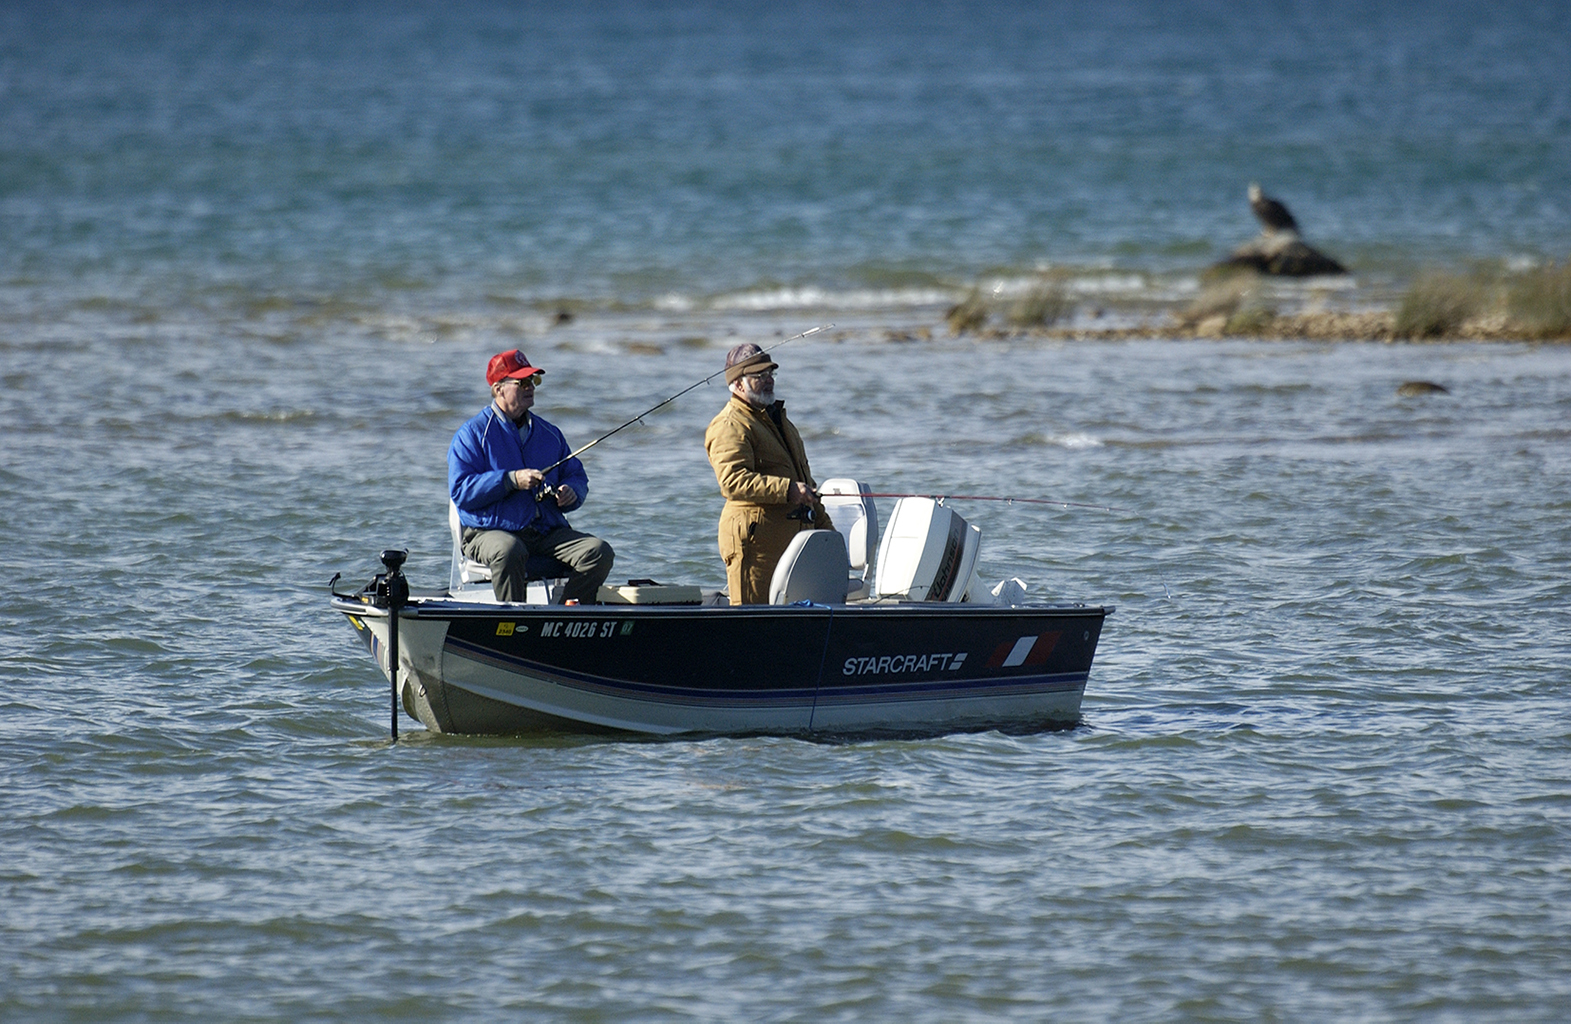 DIRTY HOOKER DIE CUT FISHING DECAL 33 - Pro Sport Stickers